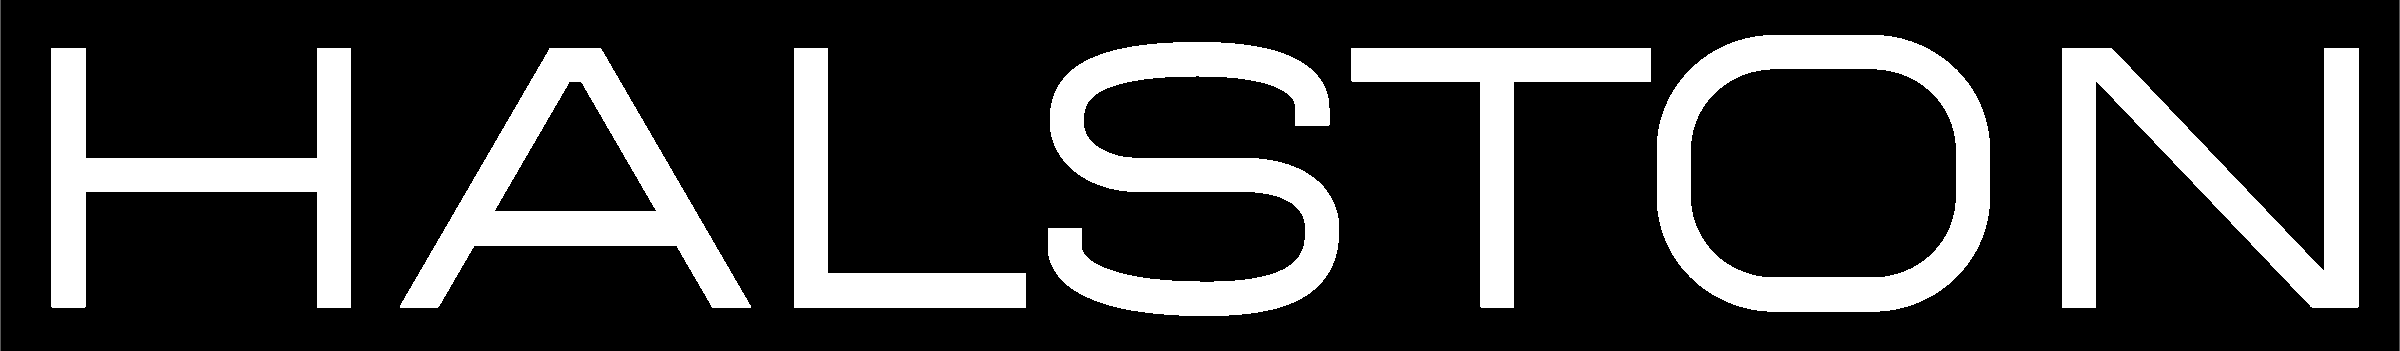 Halston Logo - Halston Logo PNG Transparent & SVG Vector - Freebie Supply